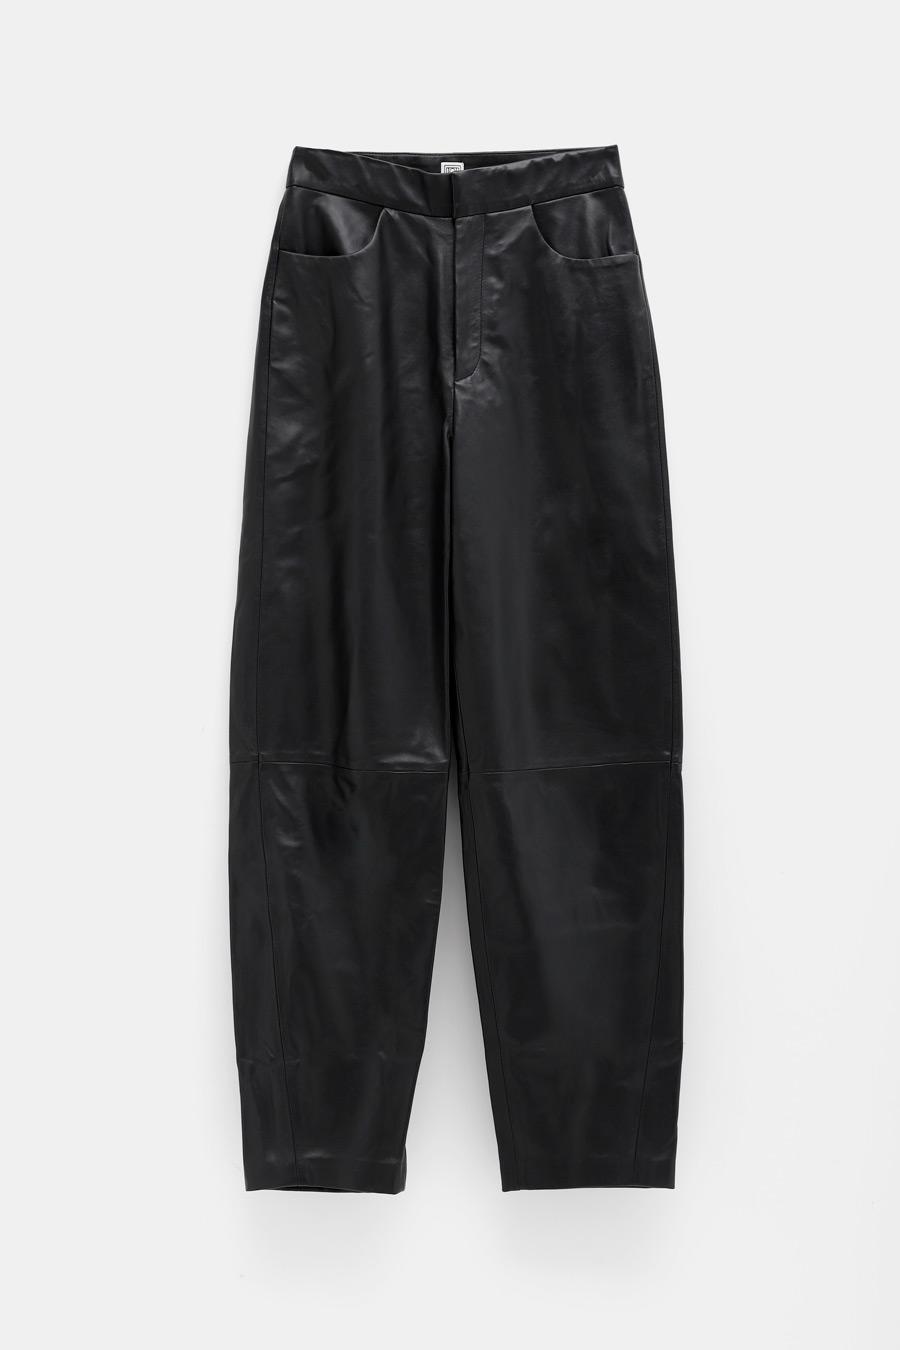 Totême Novara Leather Trousers in Black - Lyst